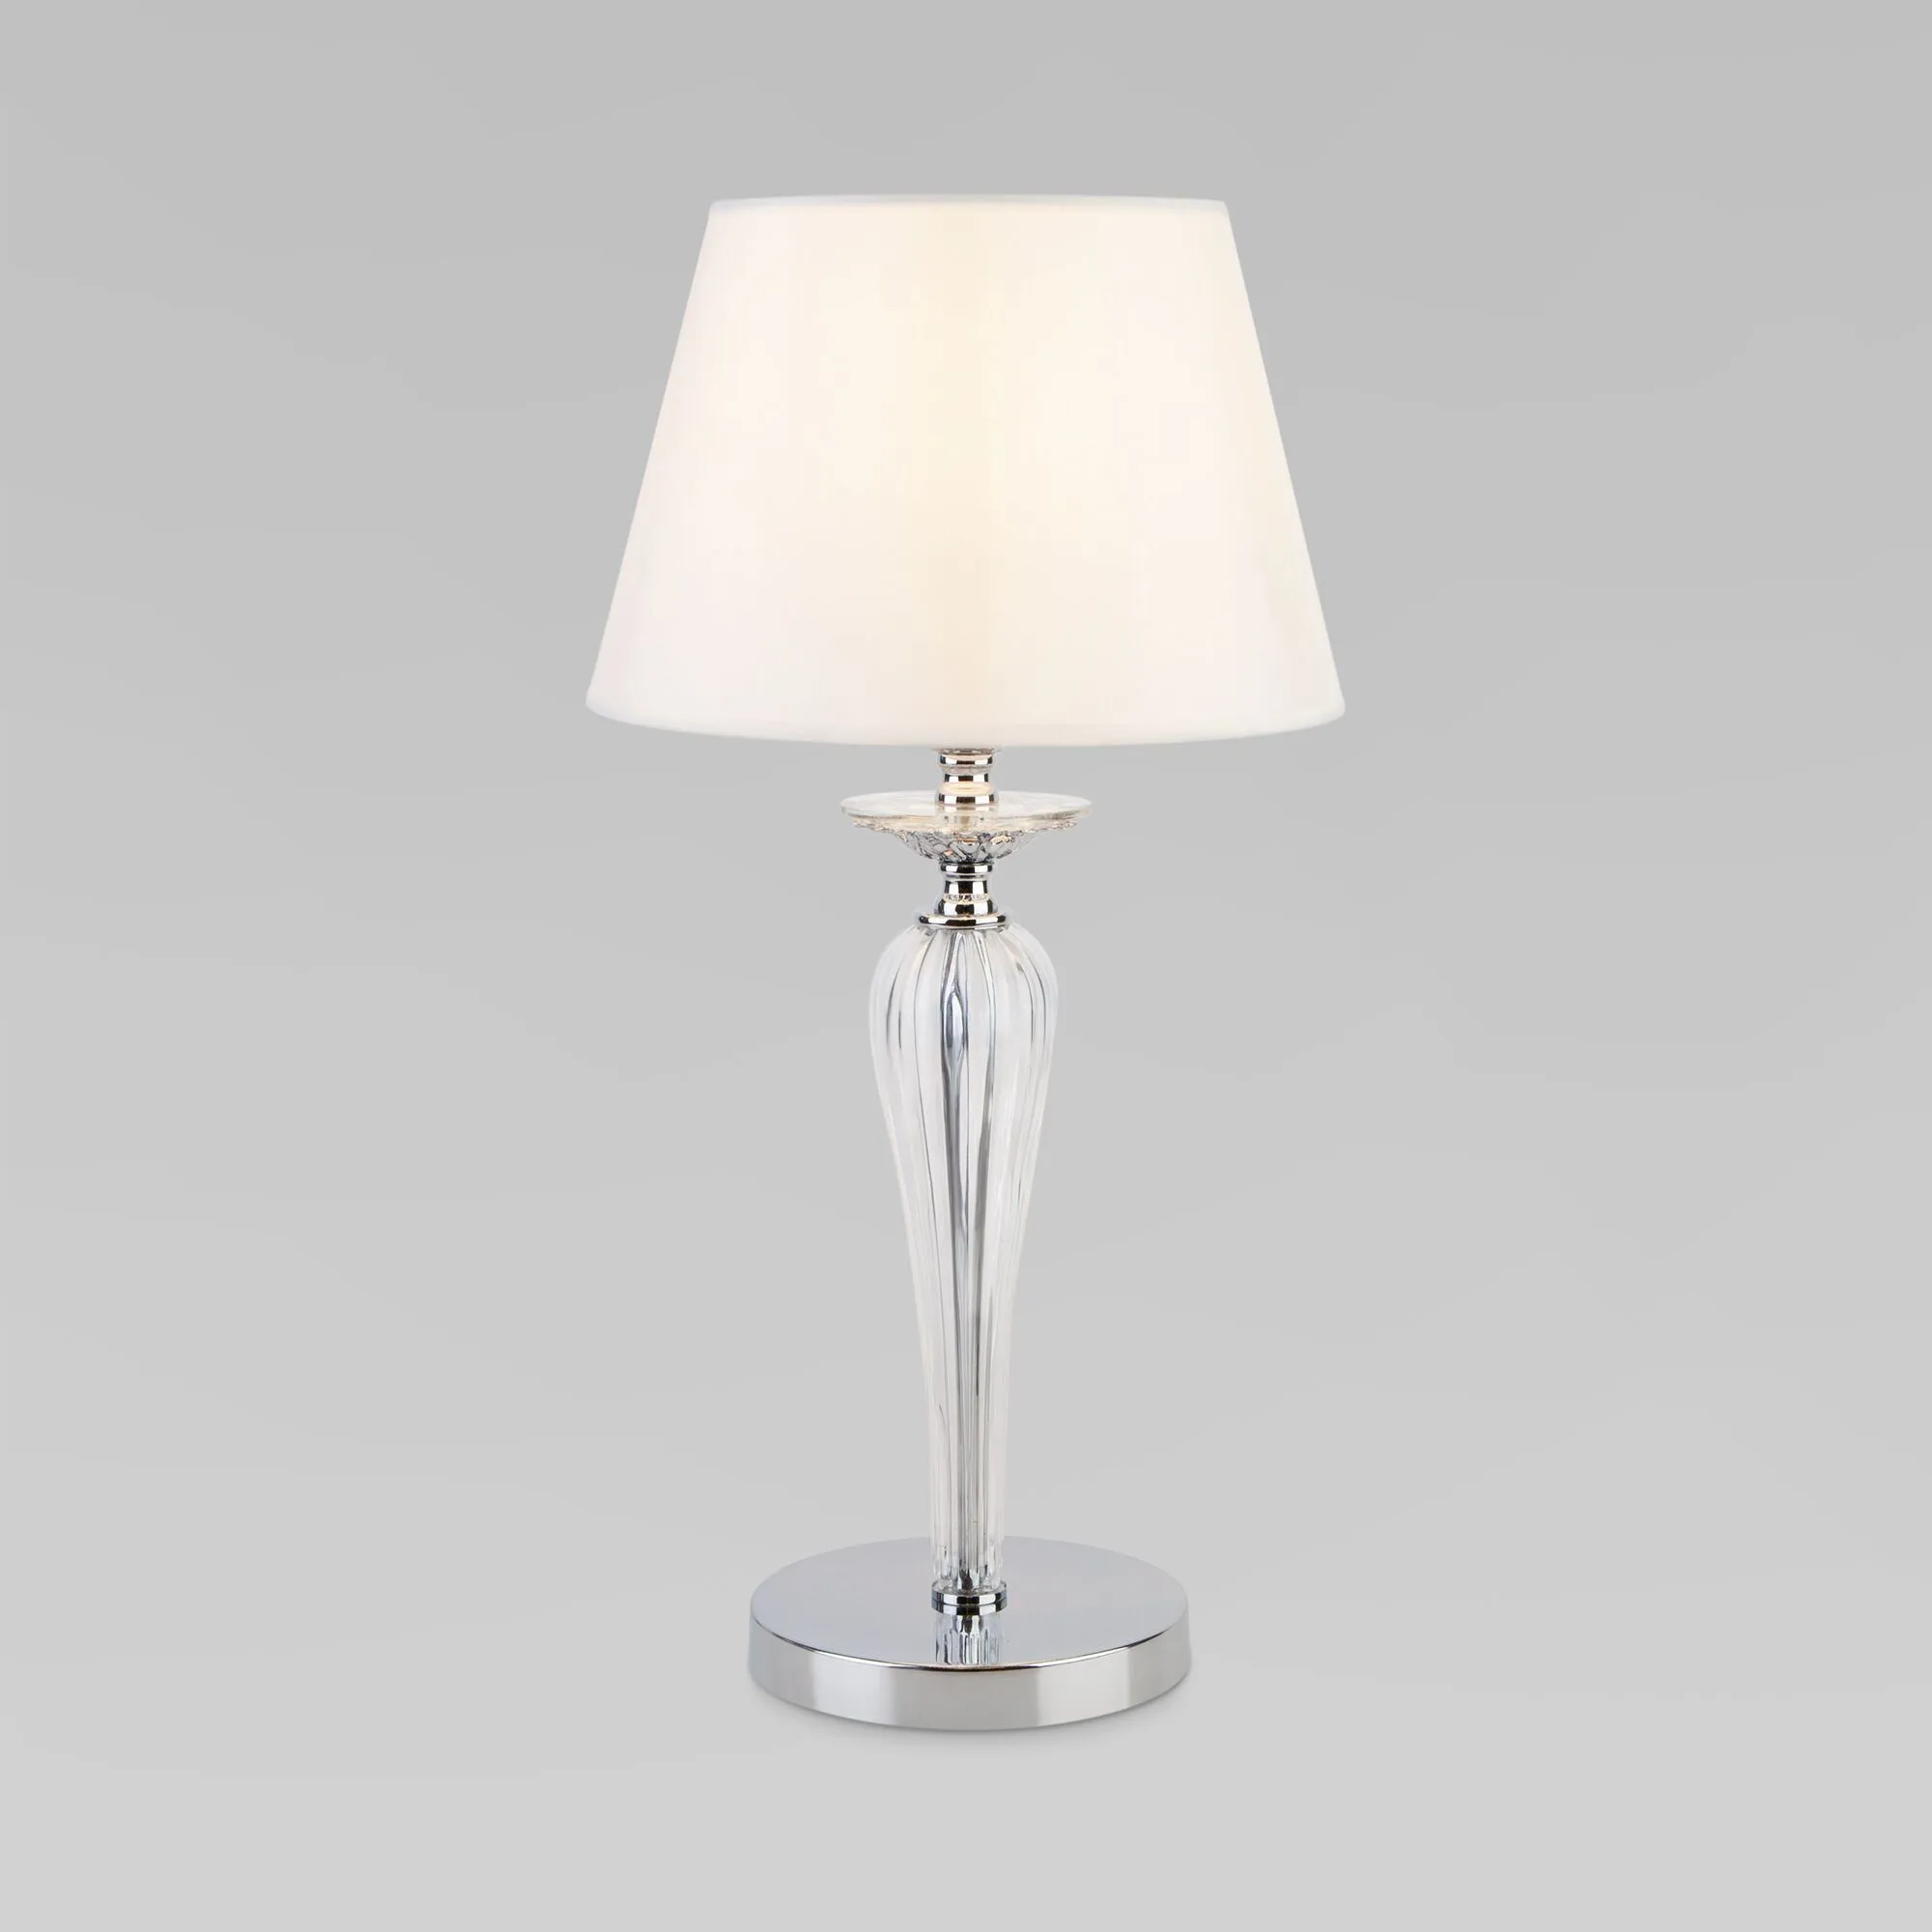 Классическая настольная лампа 01104/1 белый  Eurosvet